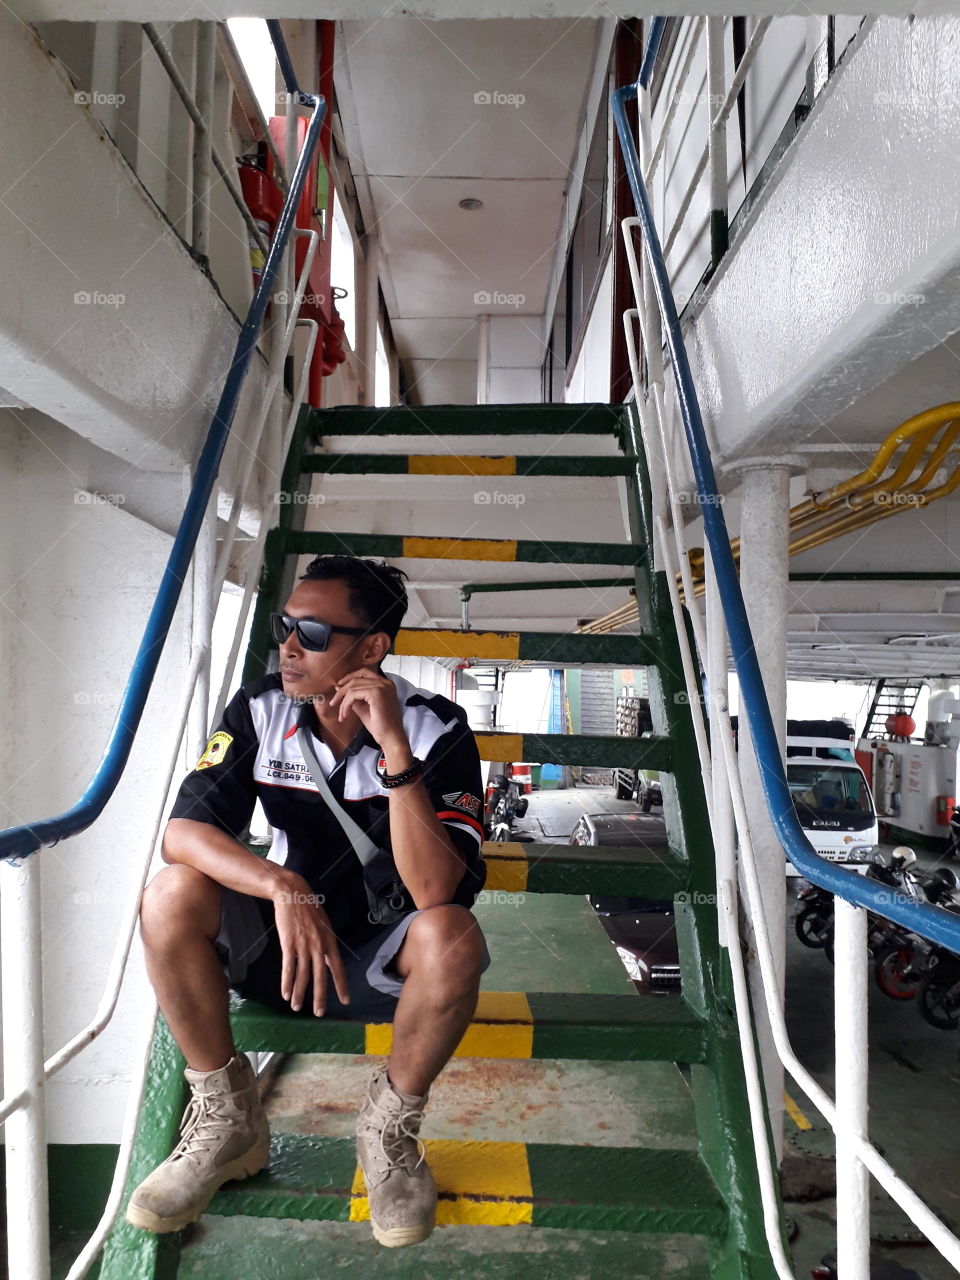 ferry tranport alone man